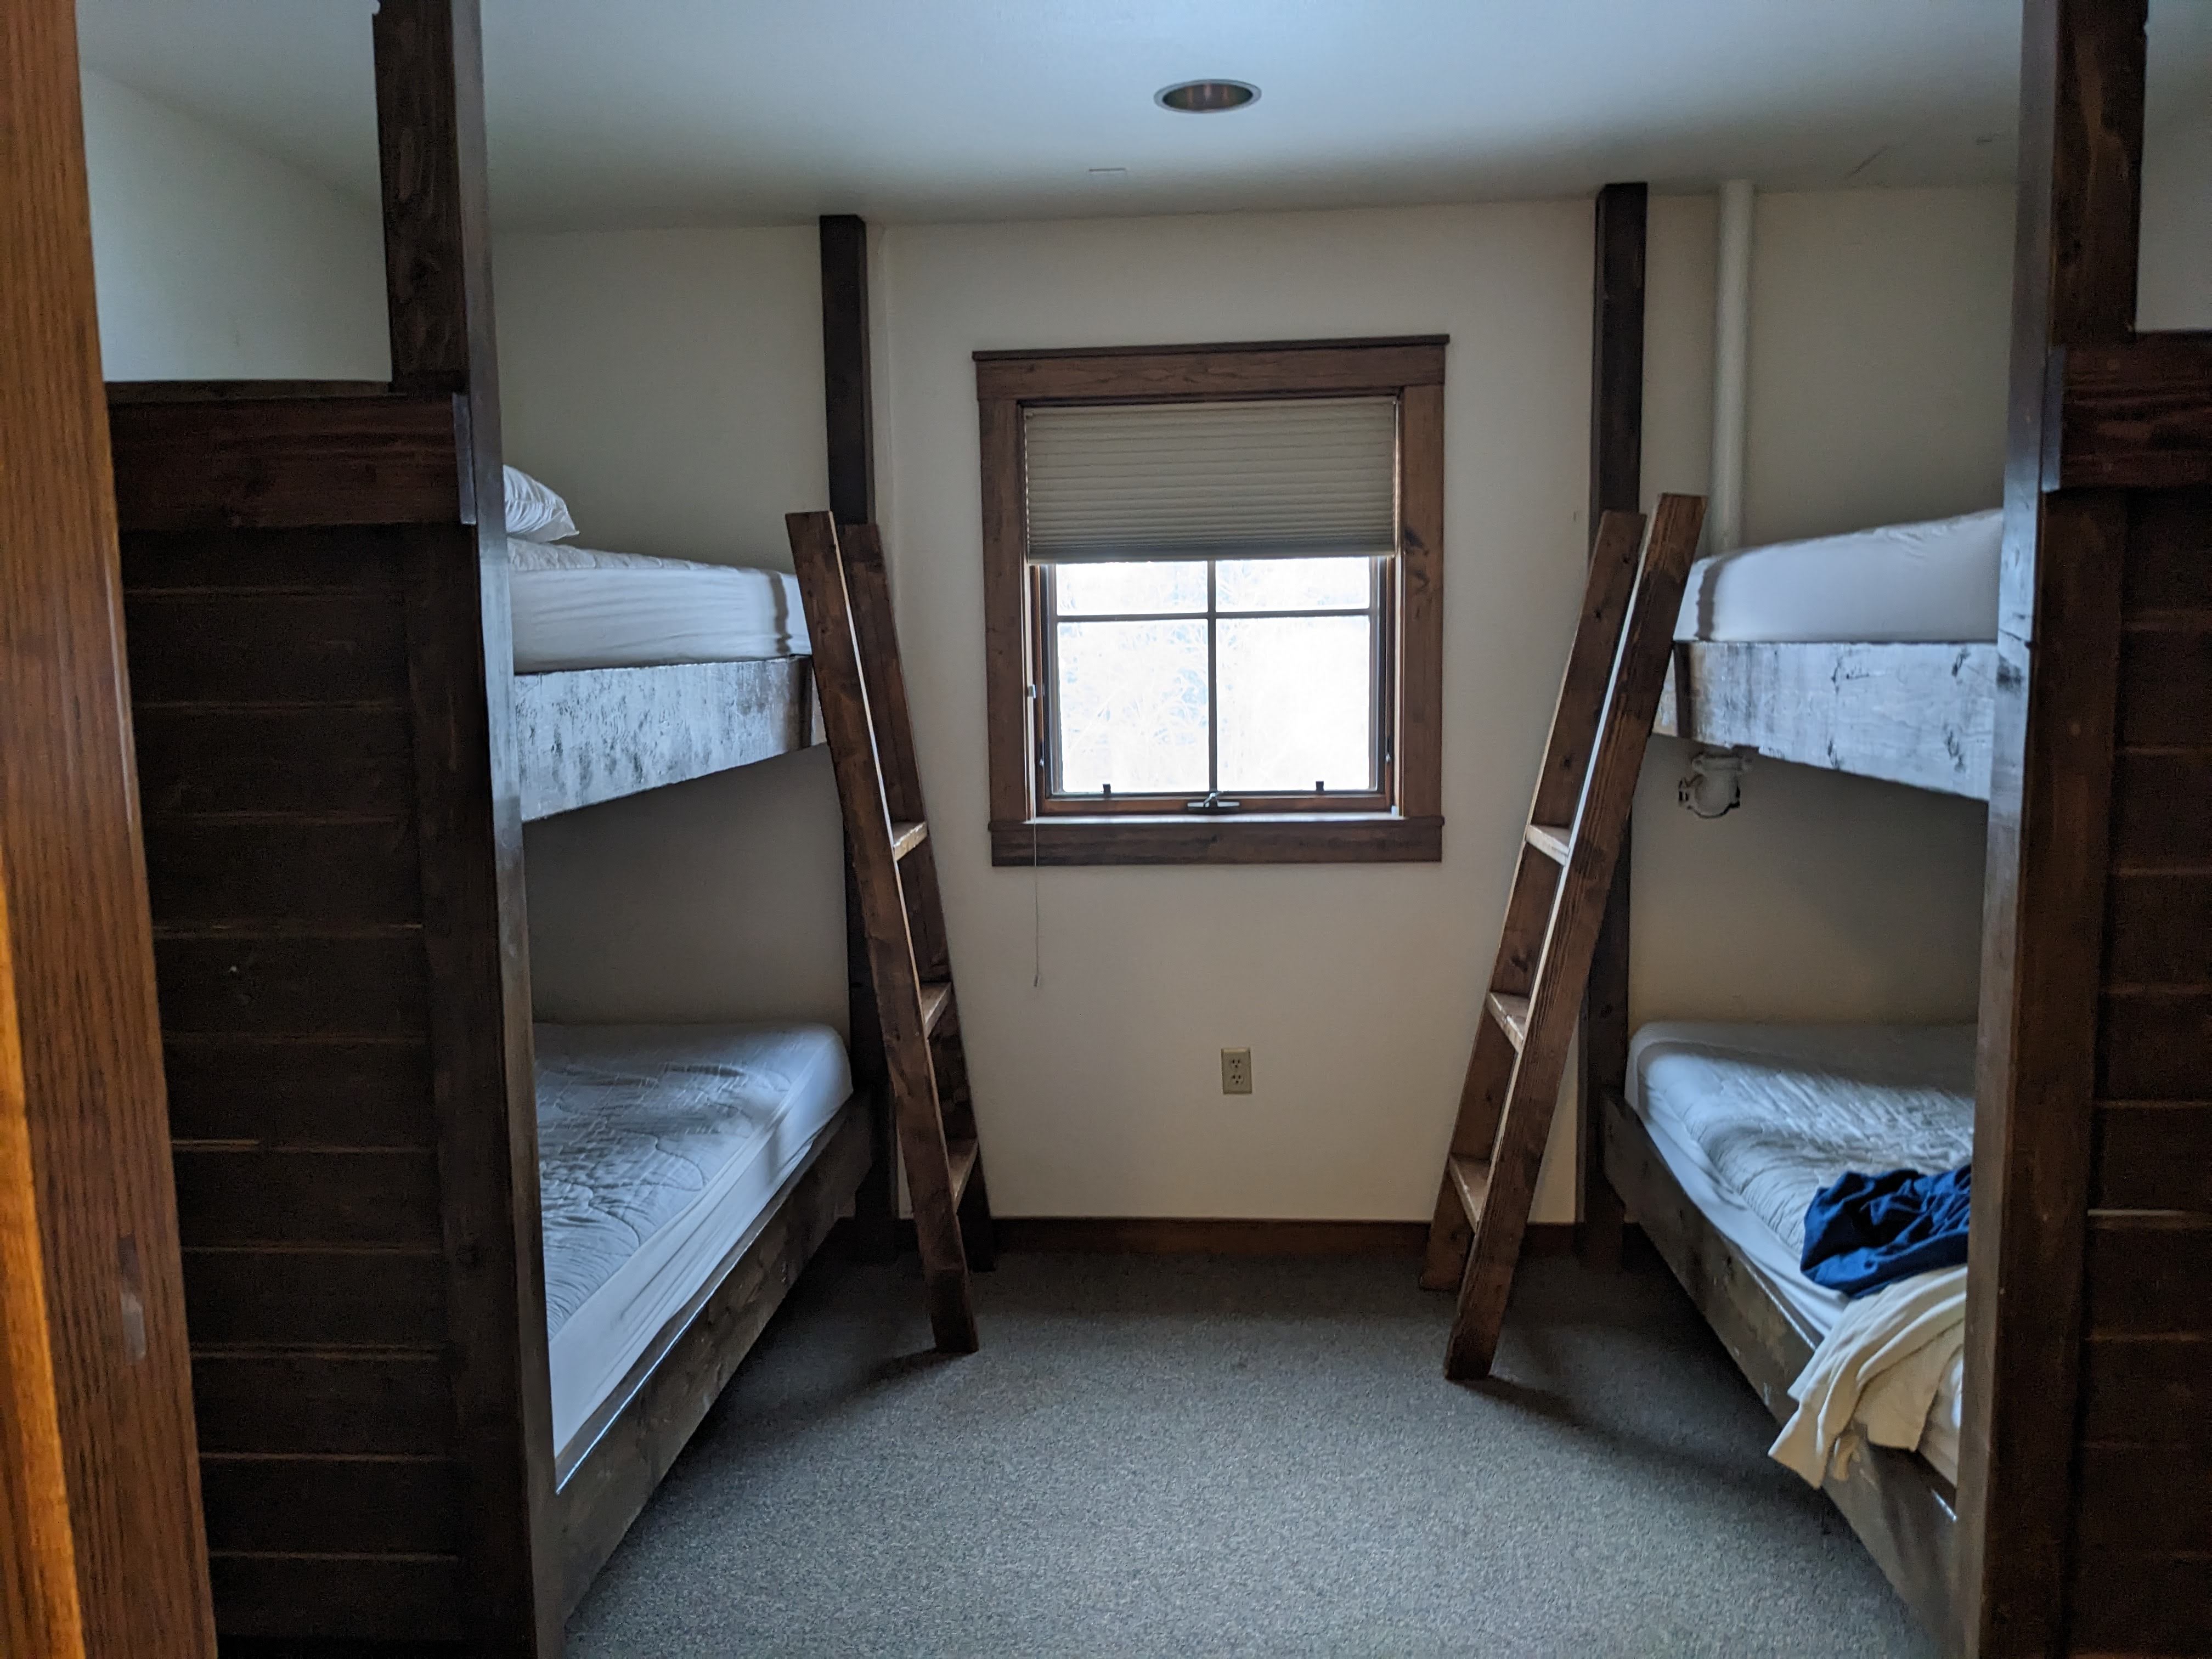 bunk-style accommodation